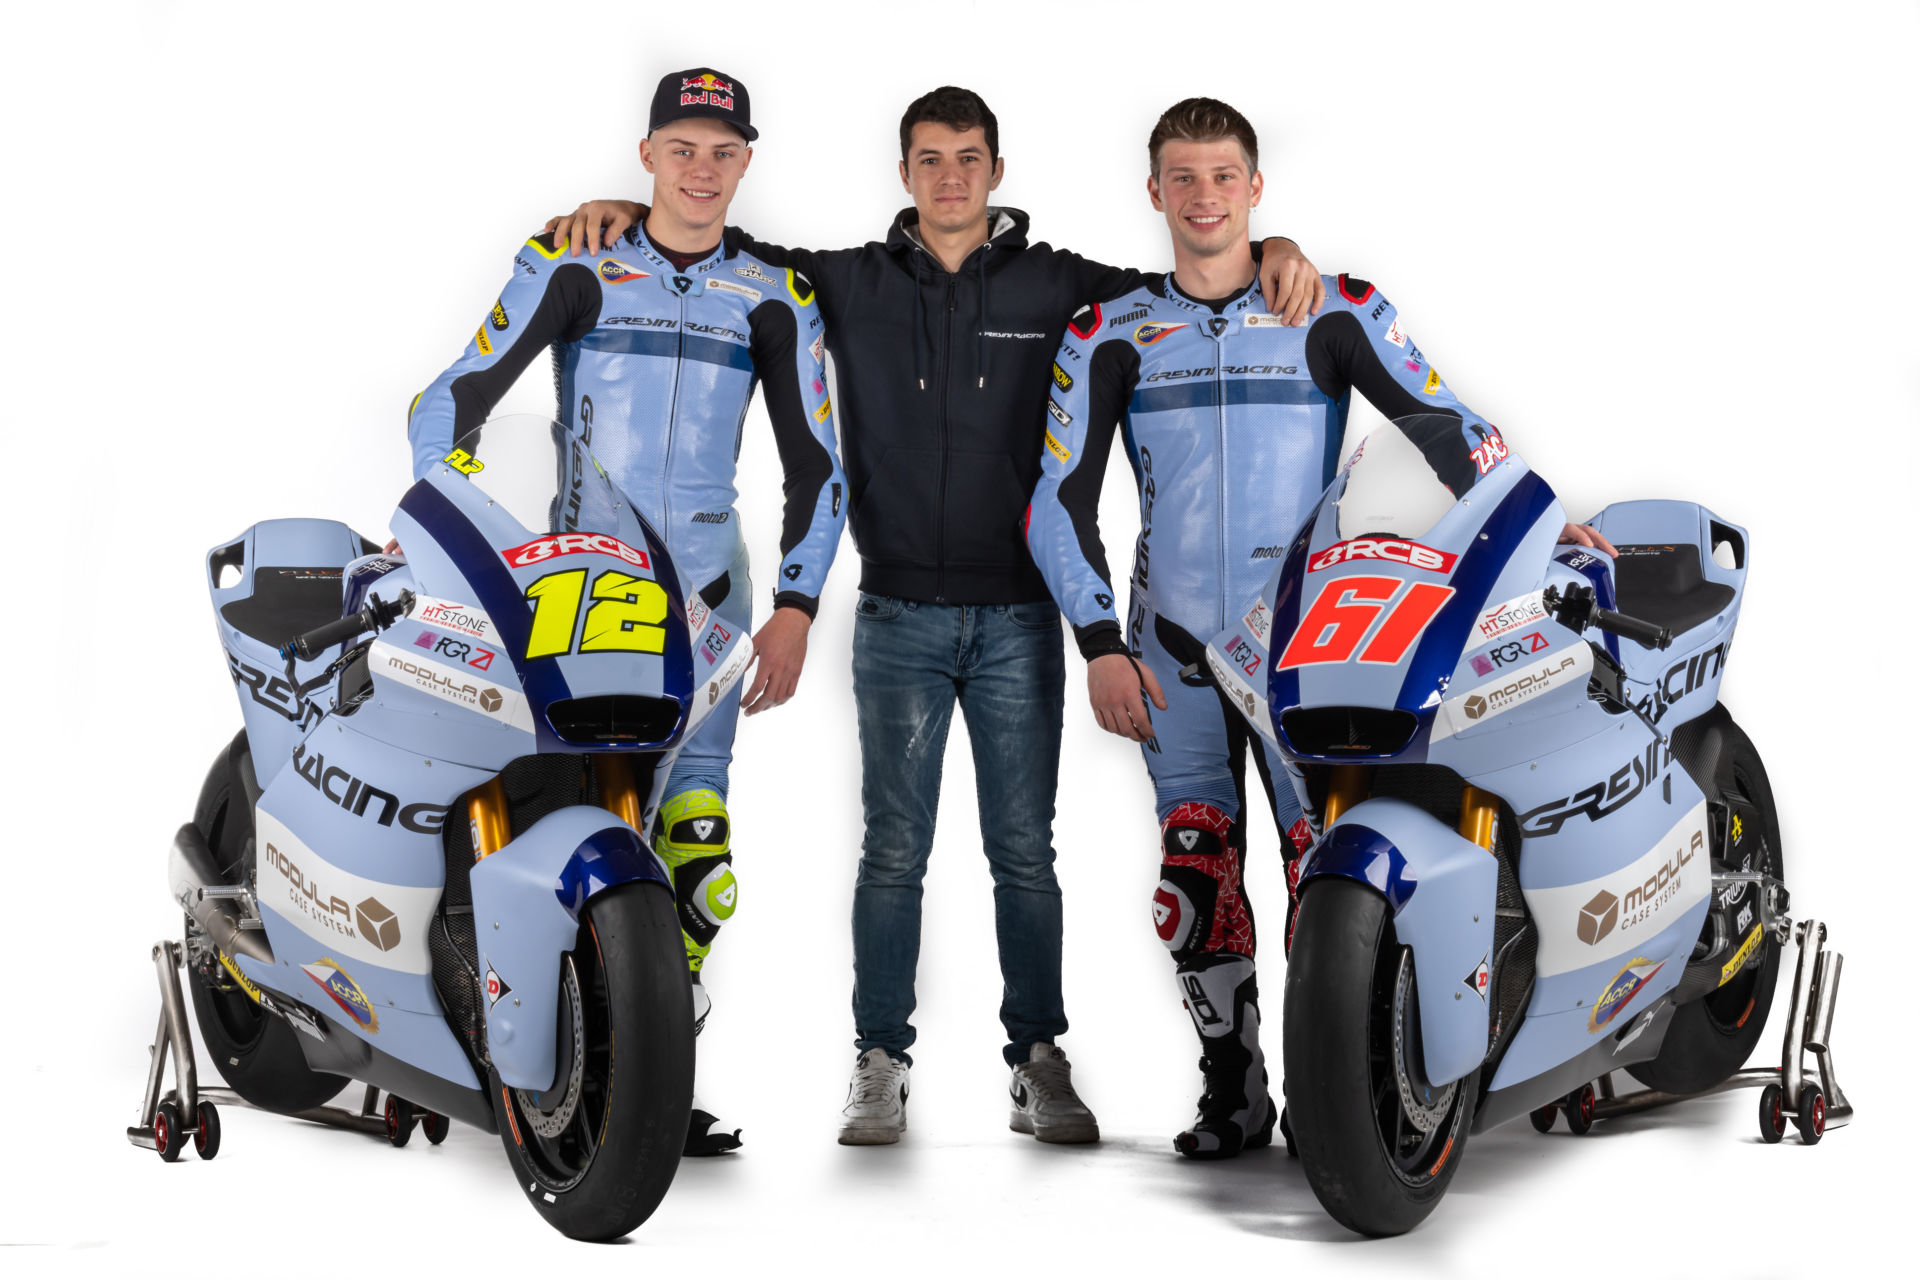 Gresini Moto2 Team's Filip Salač (left), Team Manager Luca Gresini (center), and Alessandro Zaccone (right). Photo courtesy Gresini Racing.